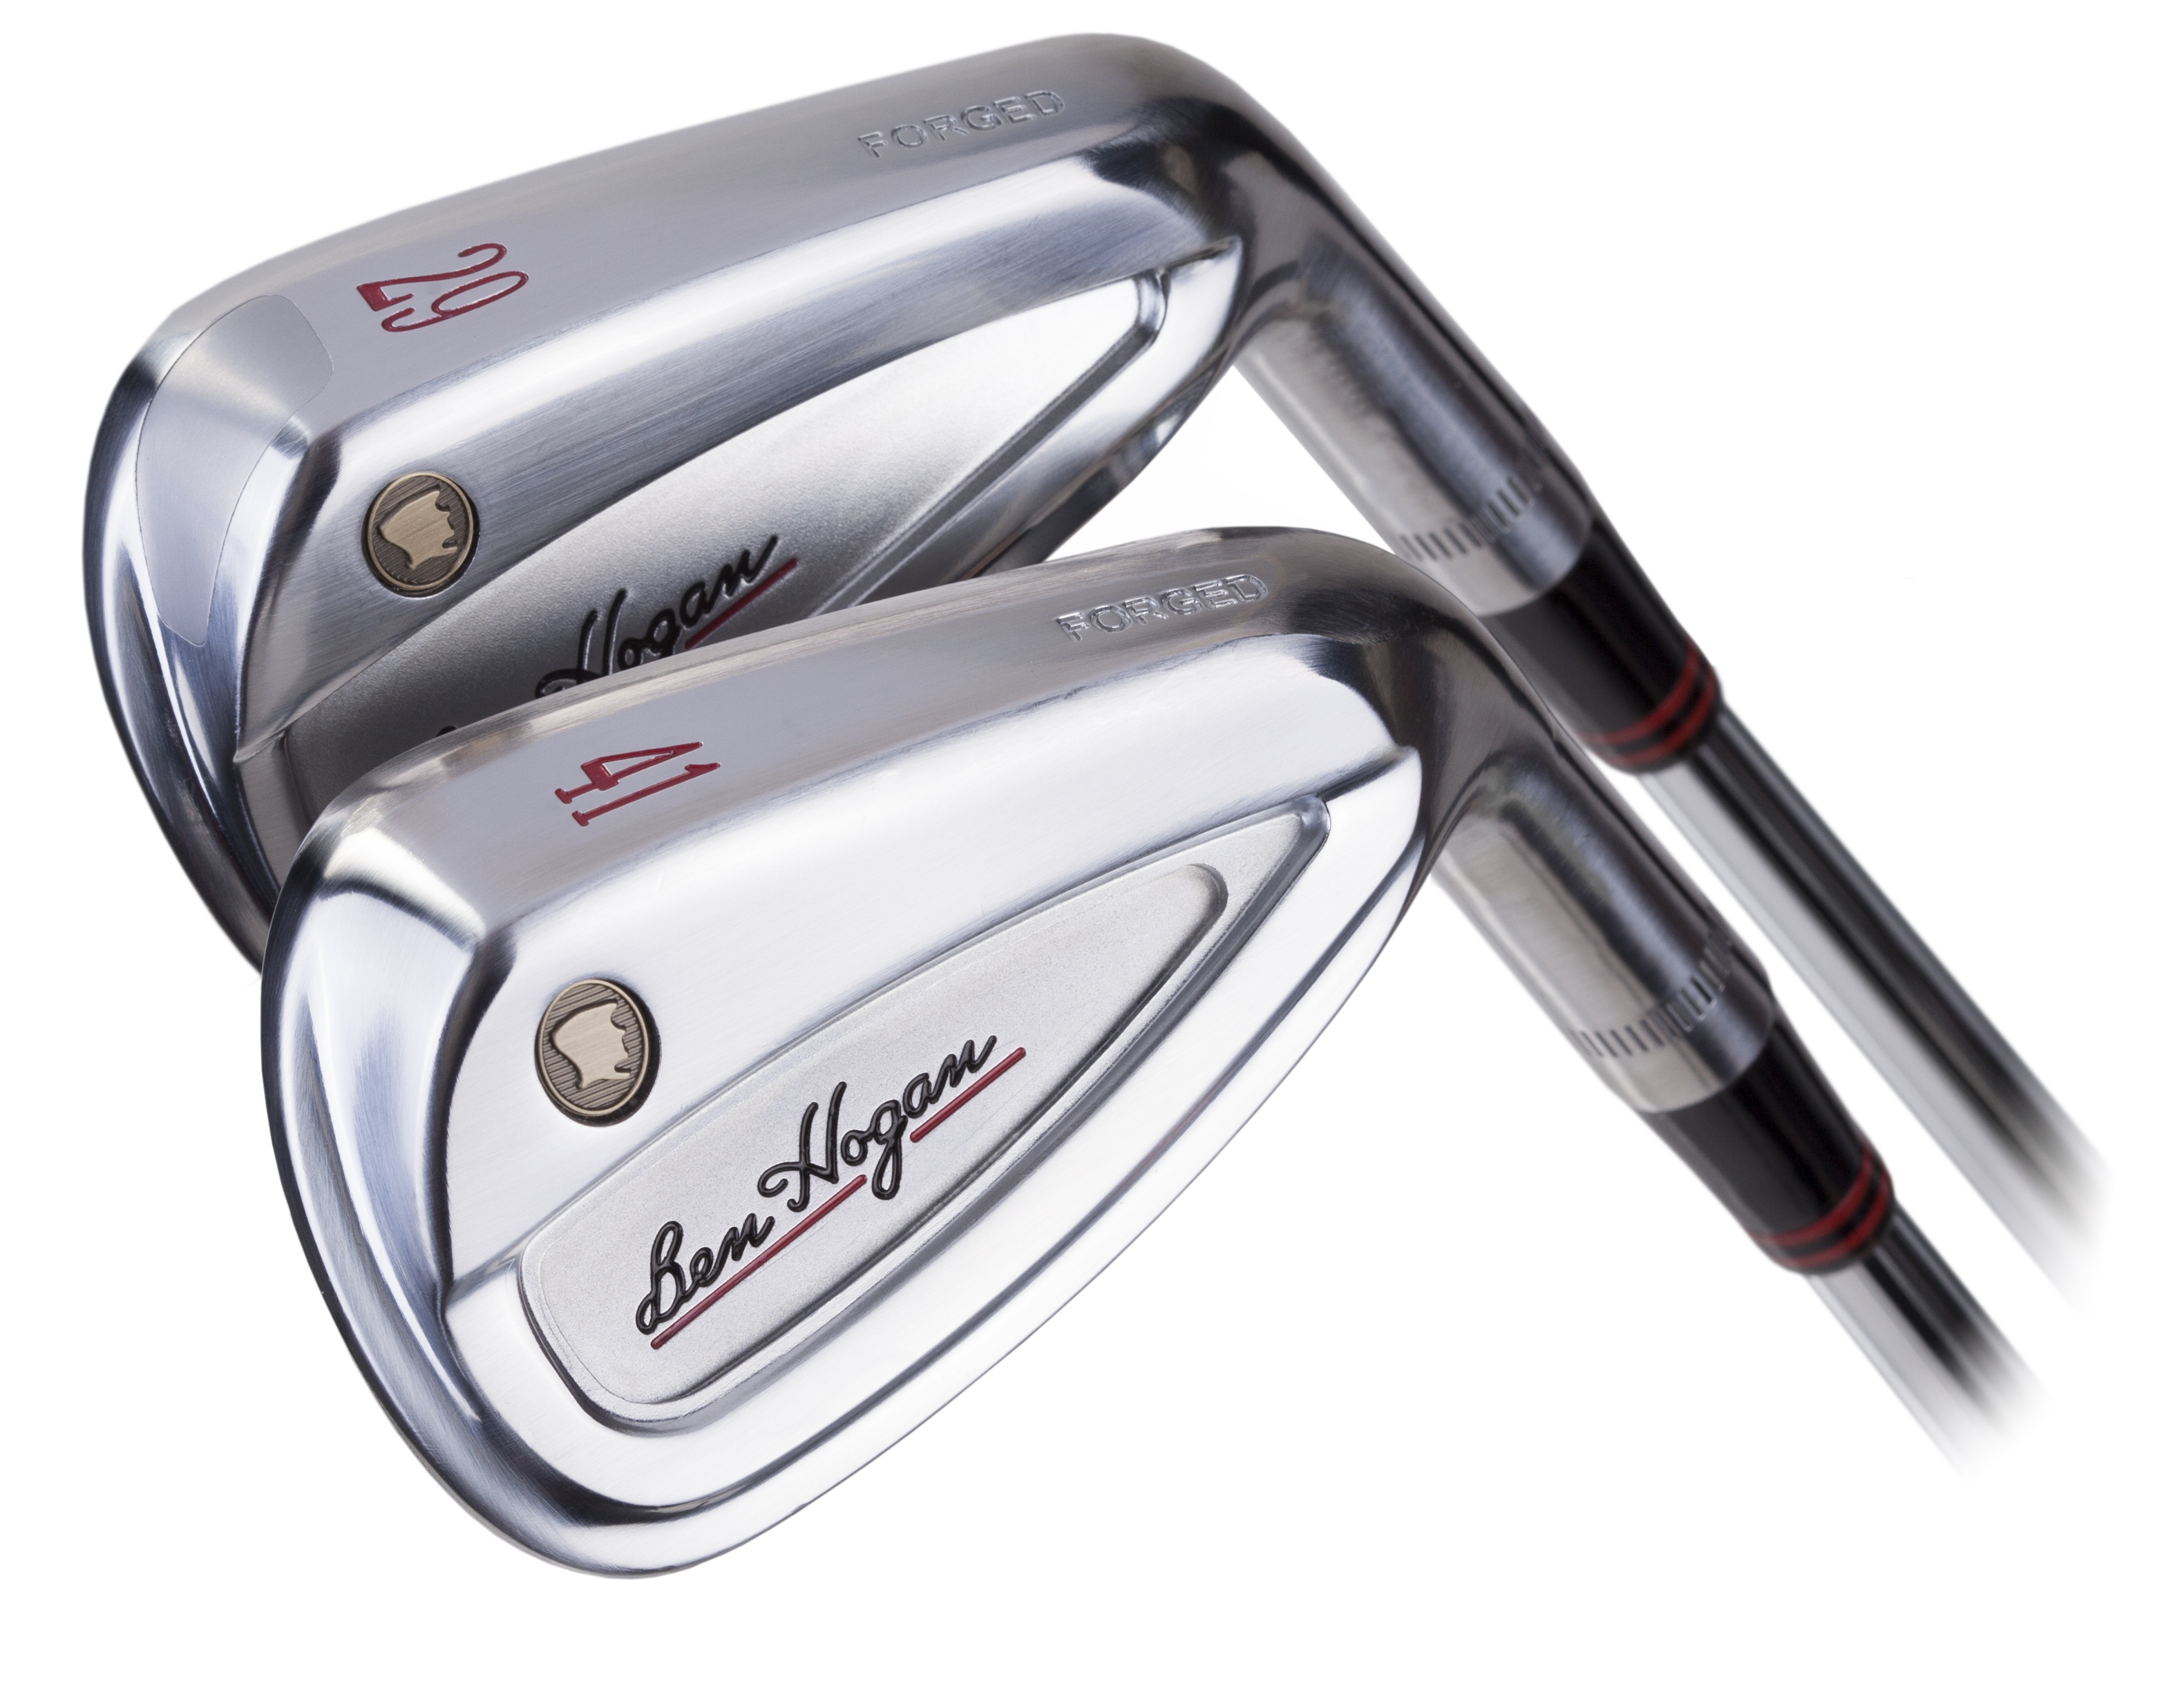 Ben Hogan equipment with direct-to-consumer model | Golf Equipment: Clubs, Balls, Bags | Golf Digest